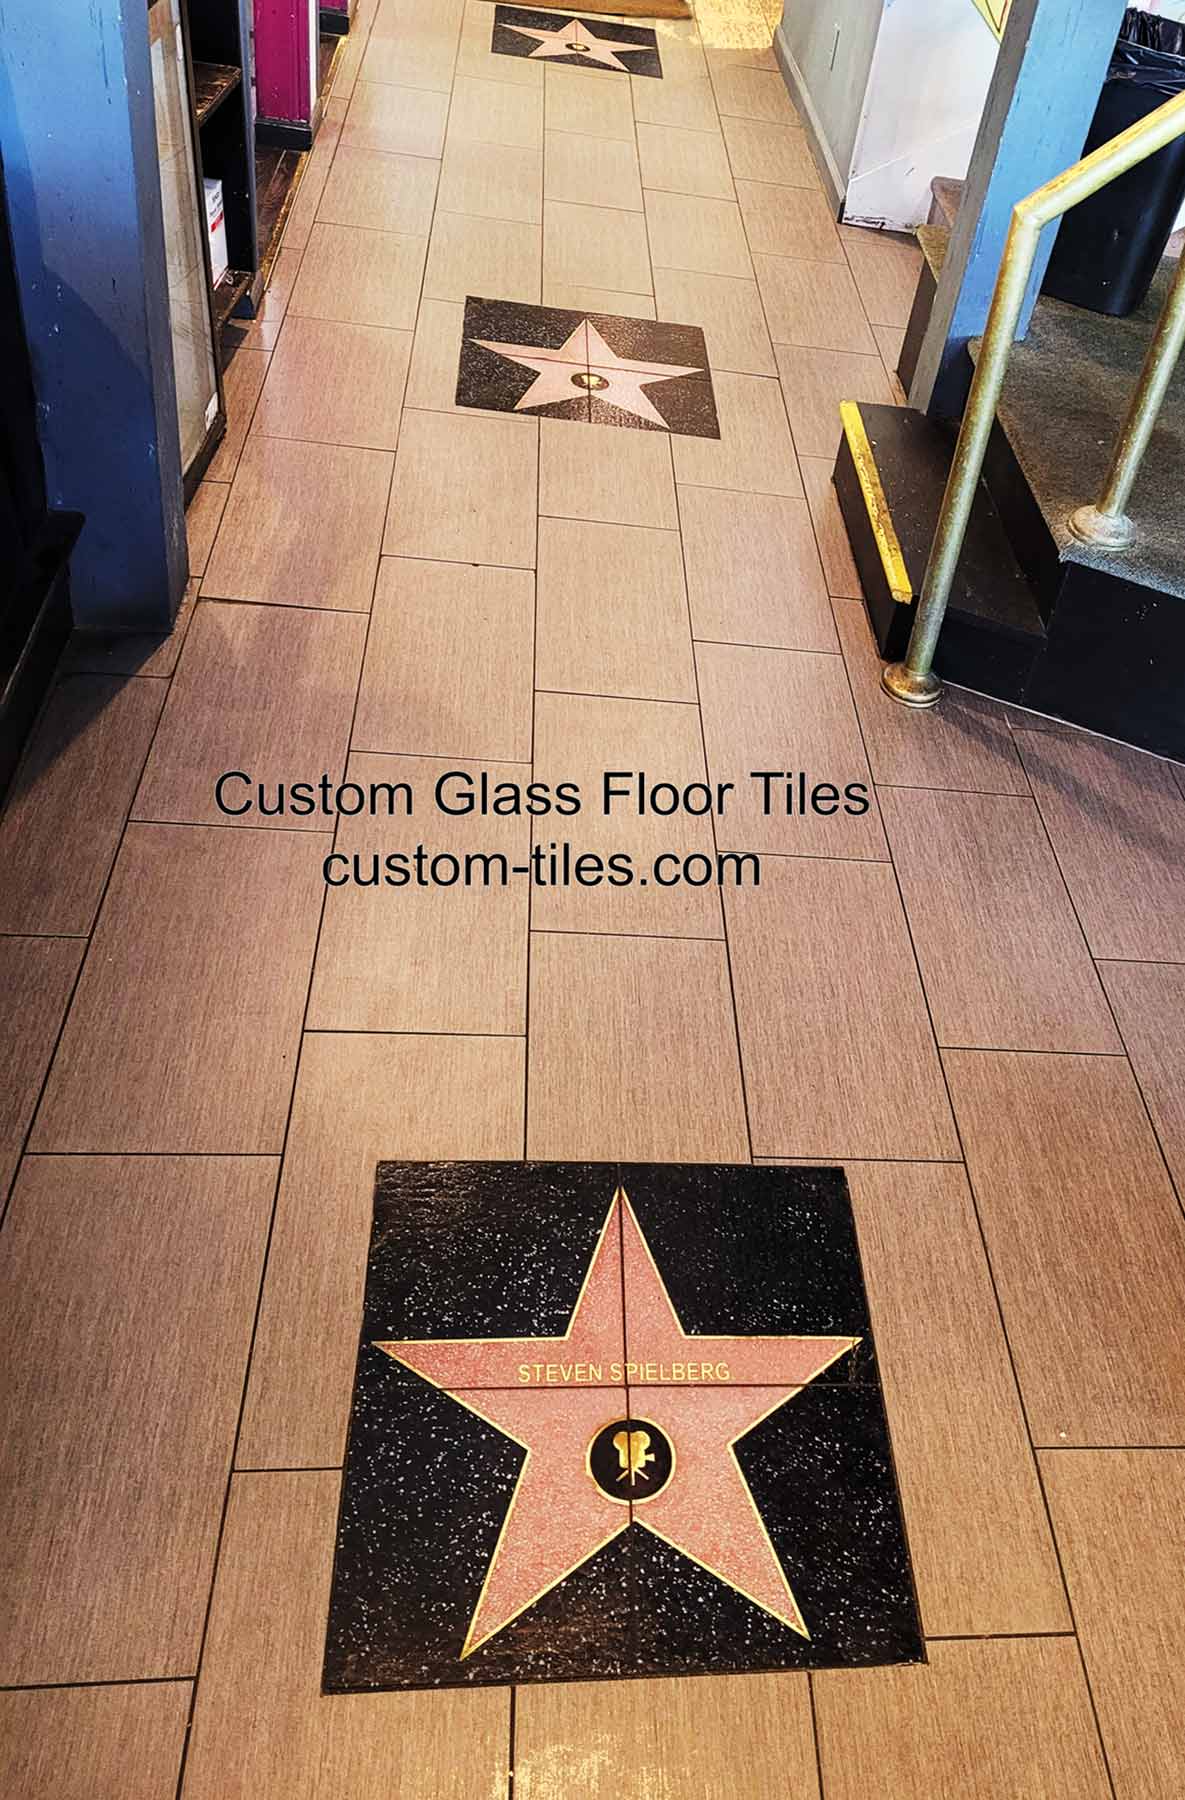 Custom Glass Floor Tiles with Printed Image